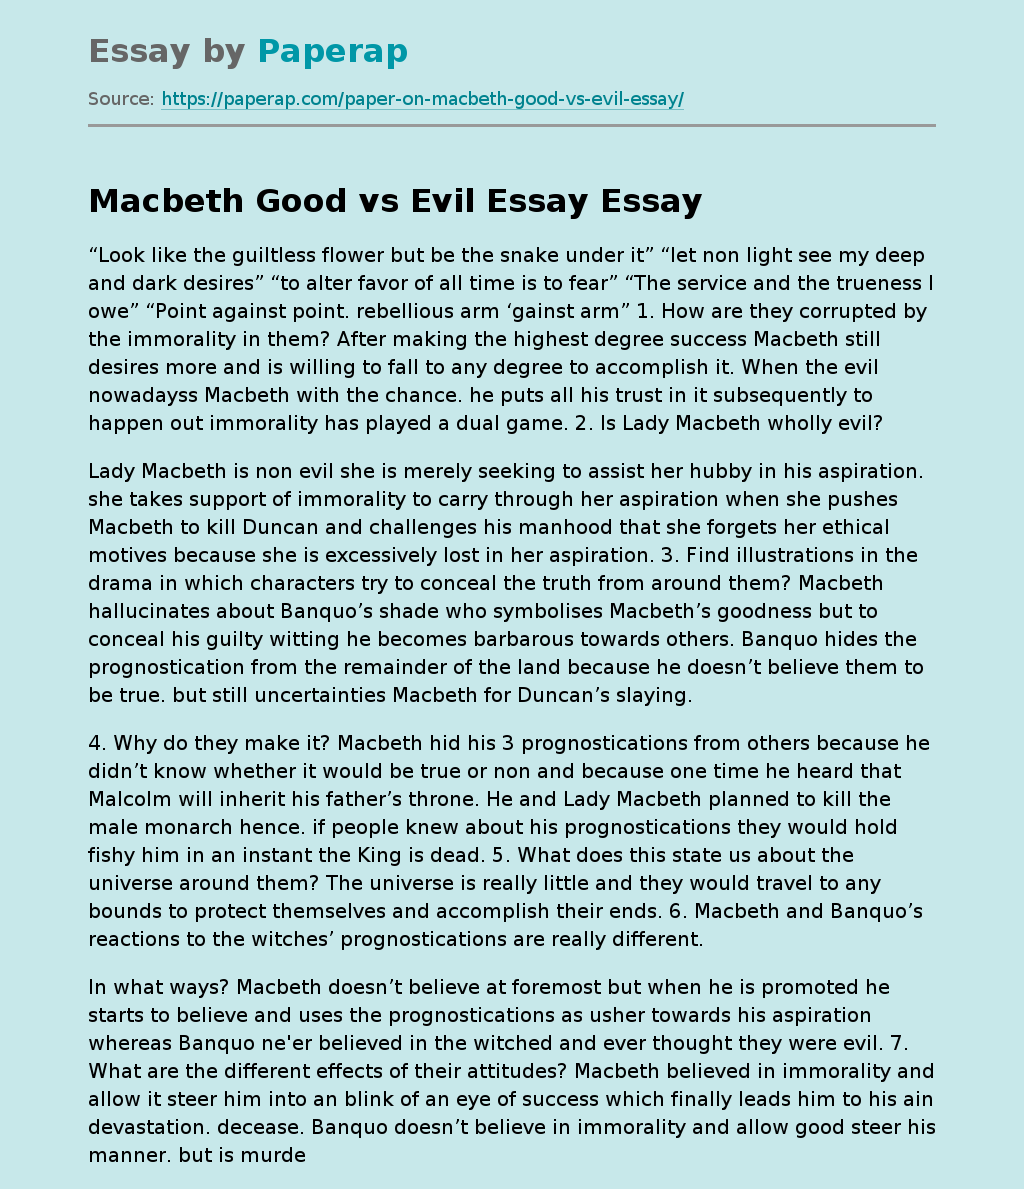 Macbeth Good vs Evil Essay